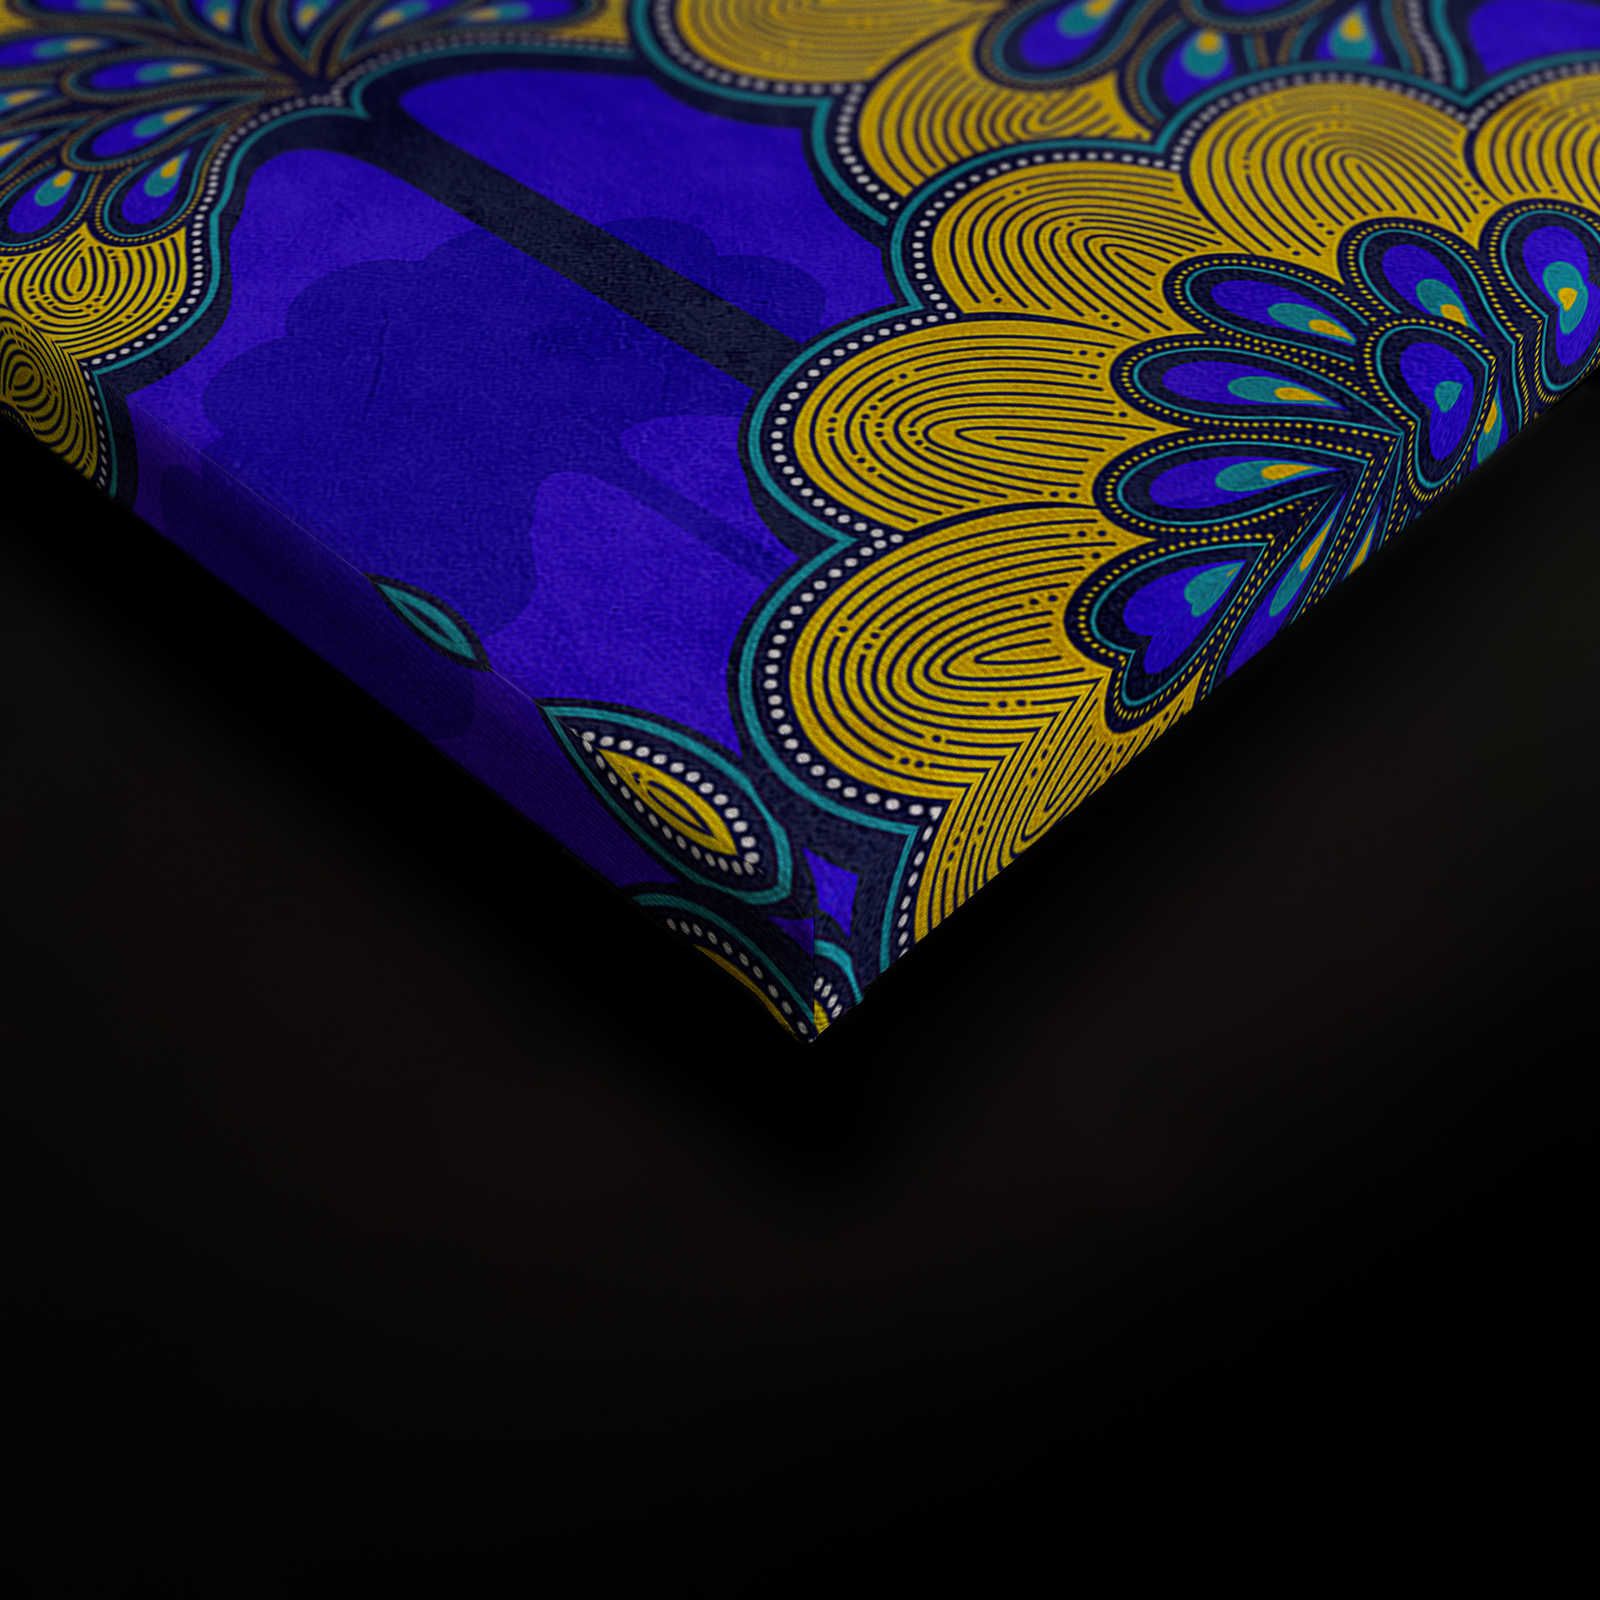             Dakar 1 - Quadro su tela in tessuto africano con motivi blu e gialli - 0,90 m x 0,60 m
        